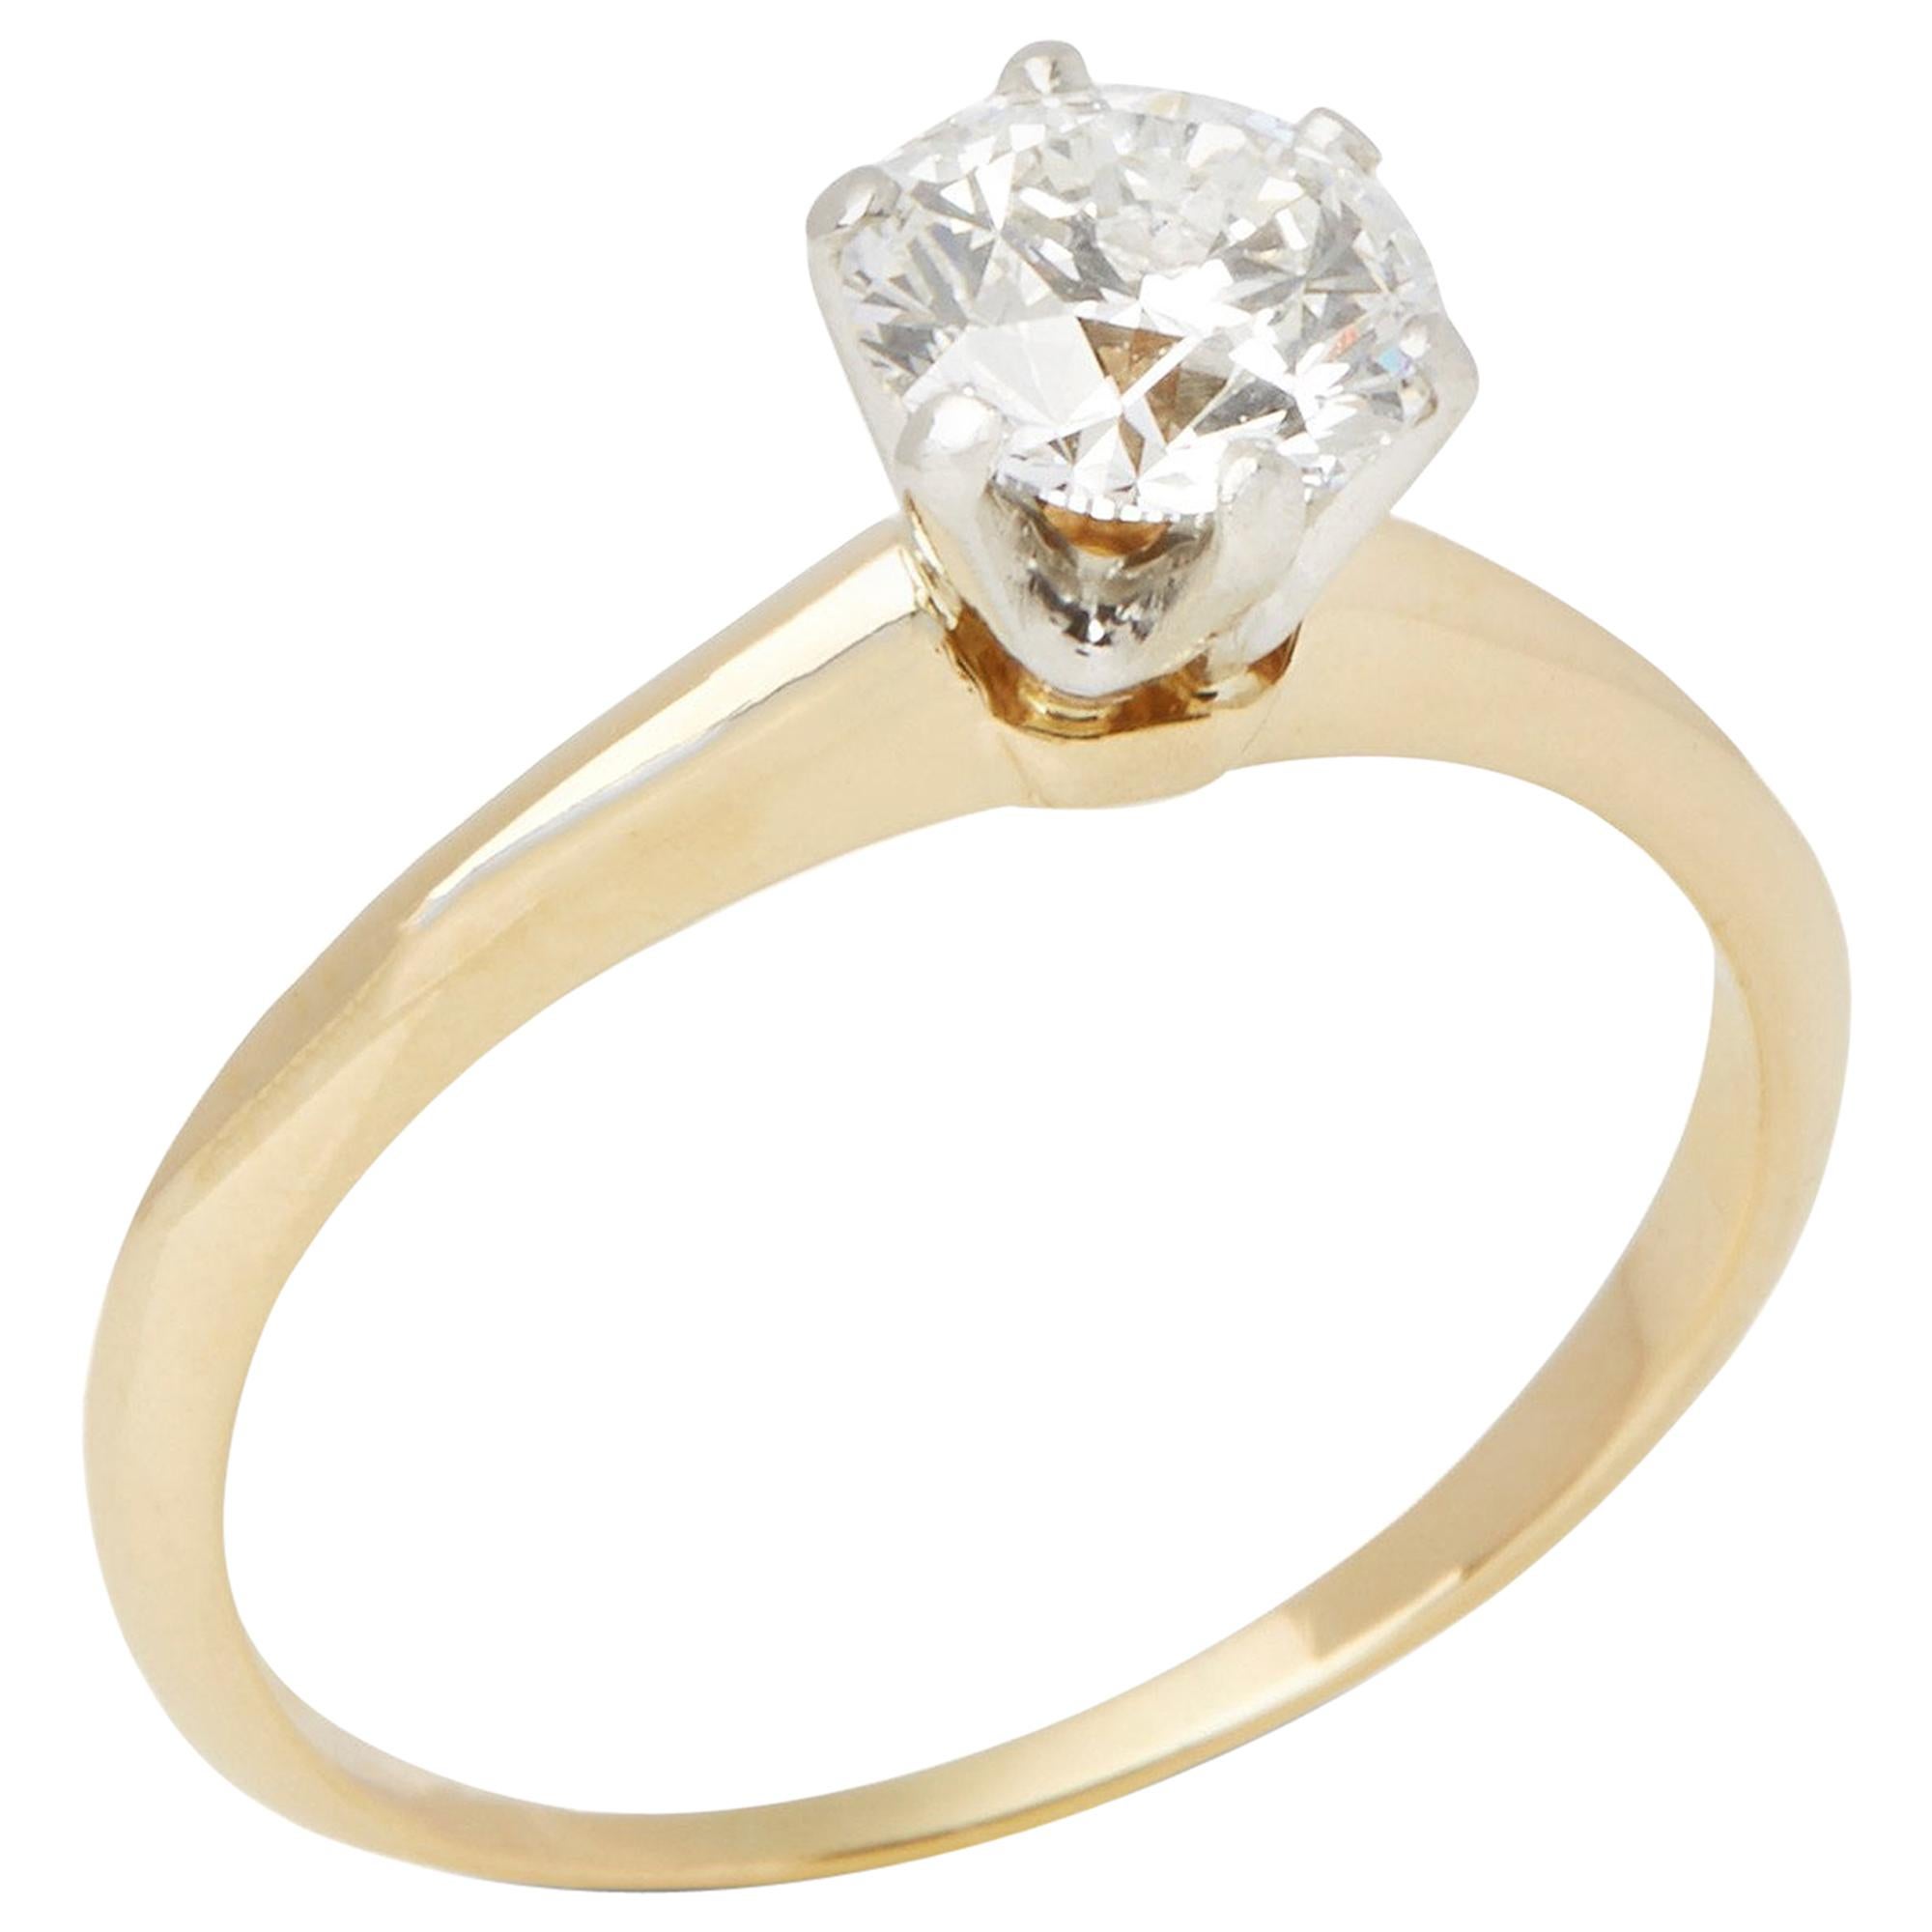 Tiffany & Co. 18 Karat Yellow Gold Solitaire Diamond Ring